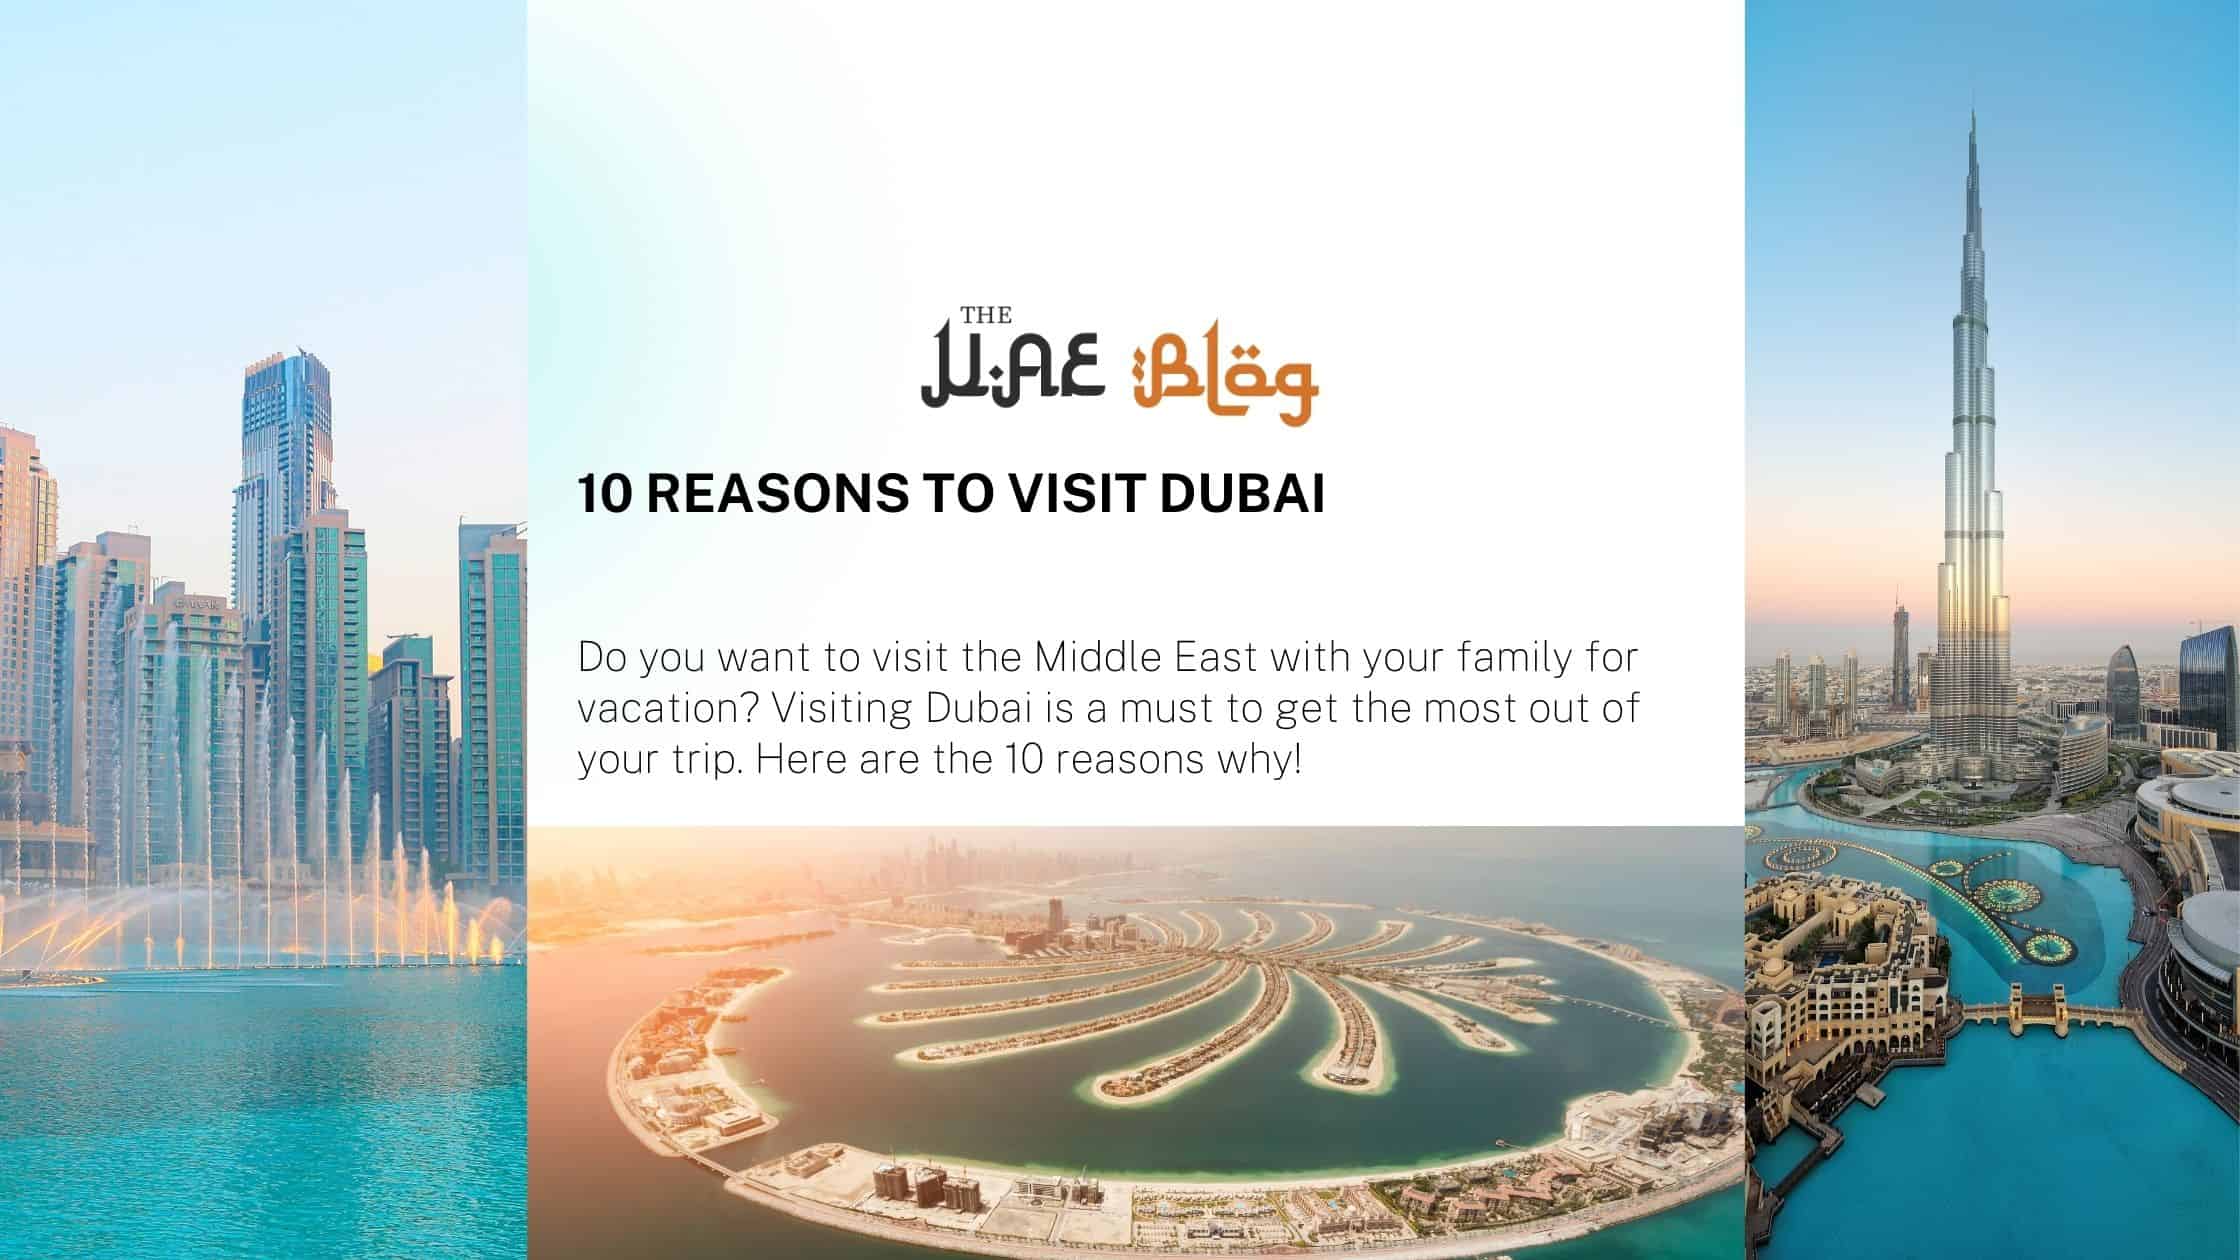 10 reasons to visit Dubai